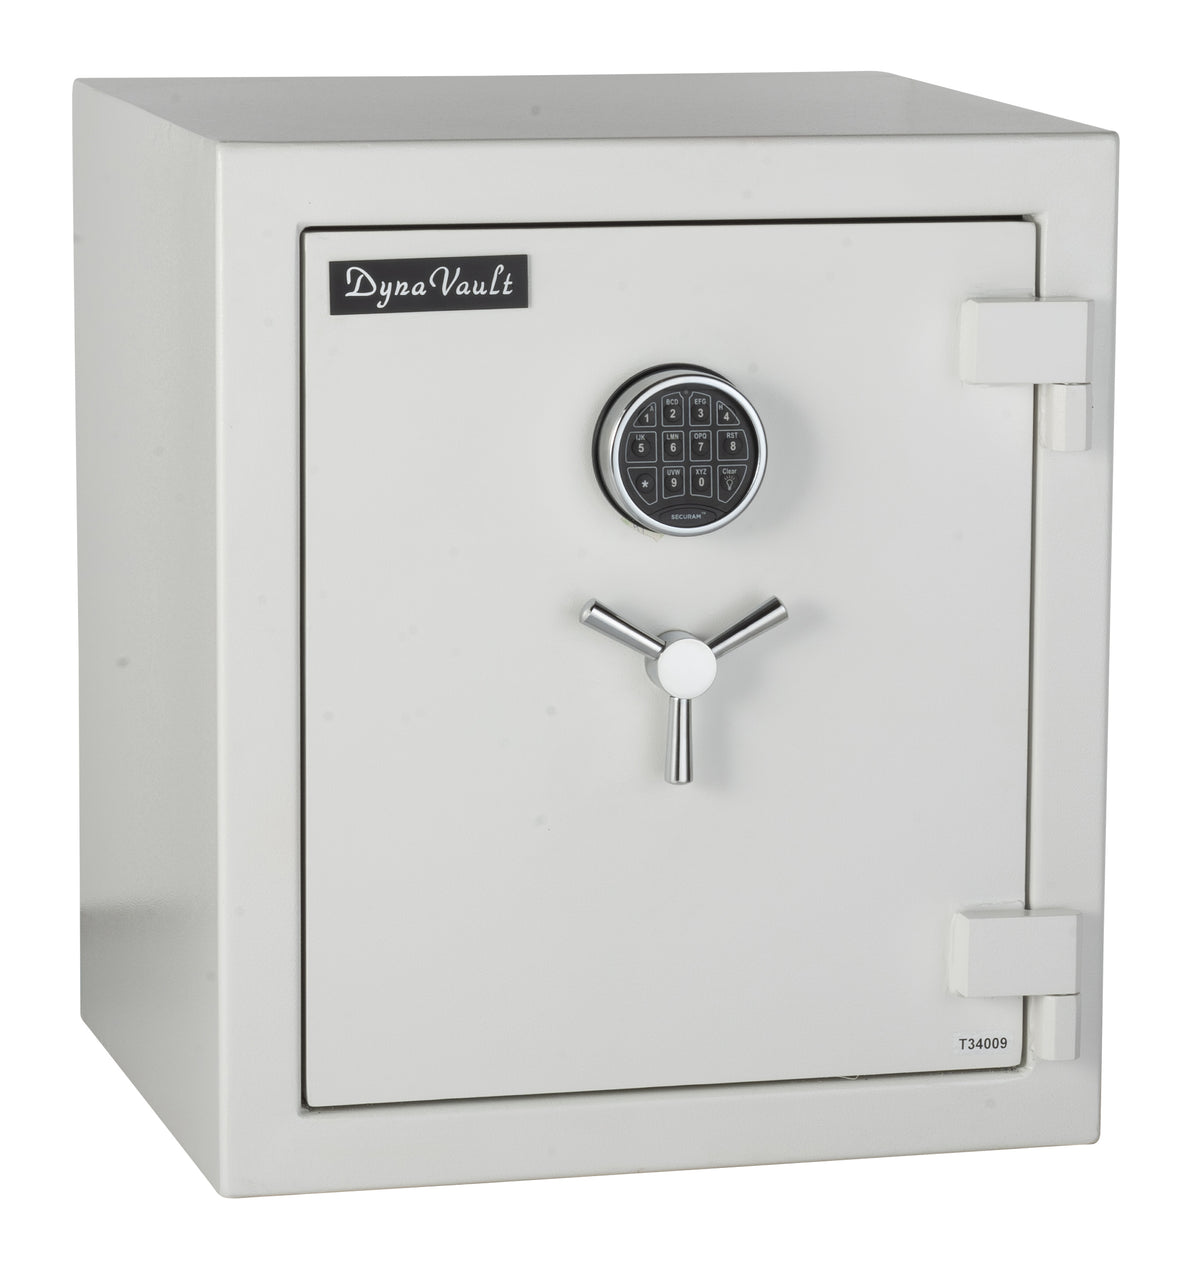 Hayman DV-2219 DynaVault Burglar Fire Safe with Electronic Lock